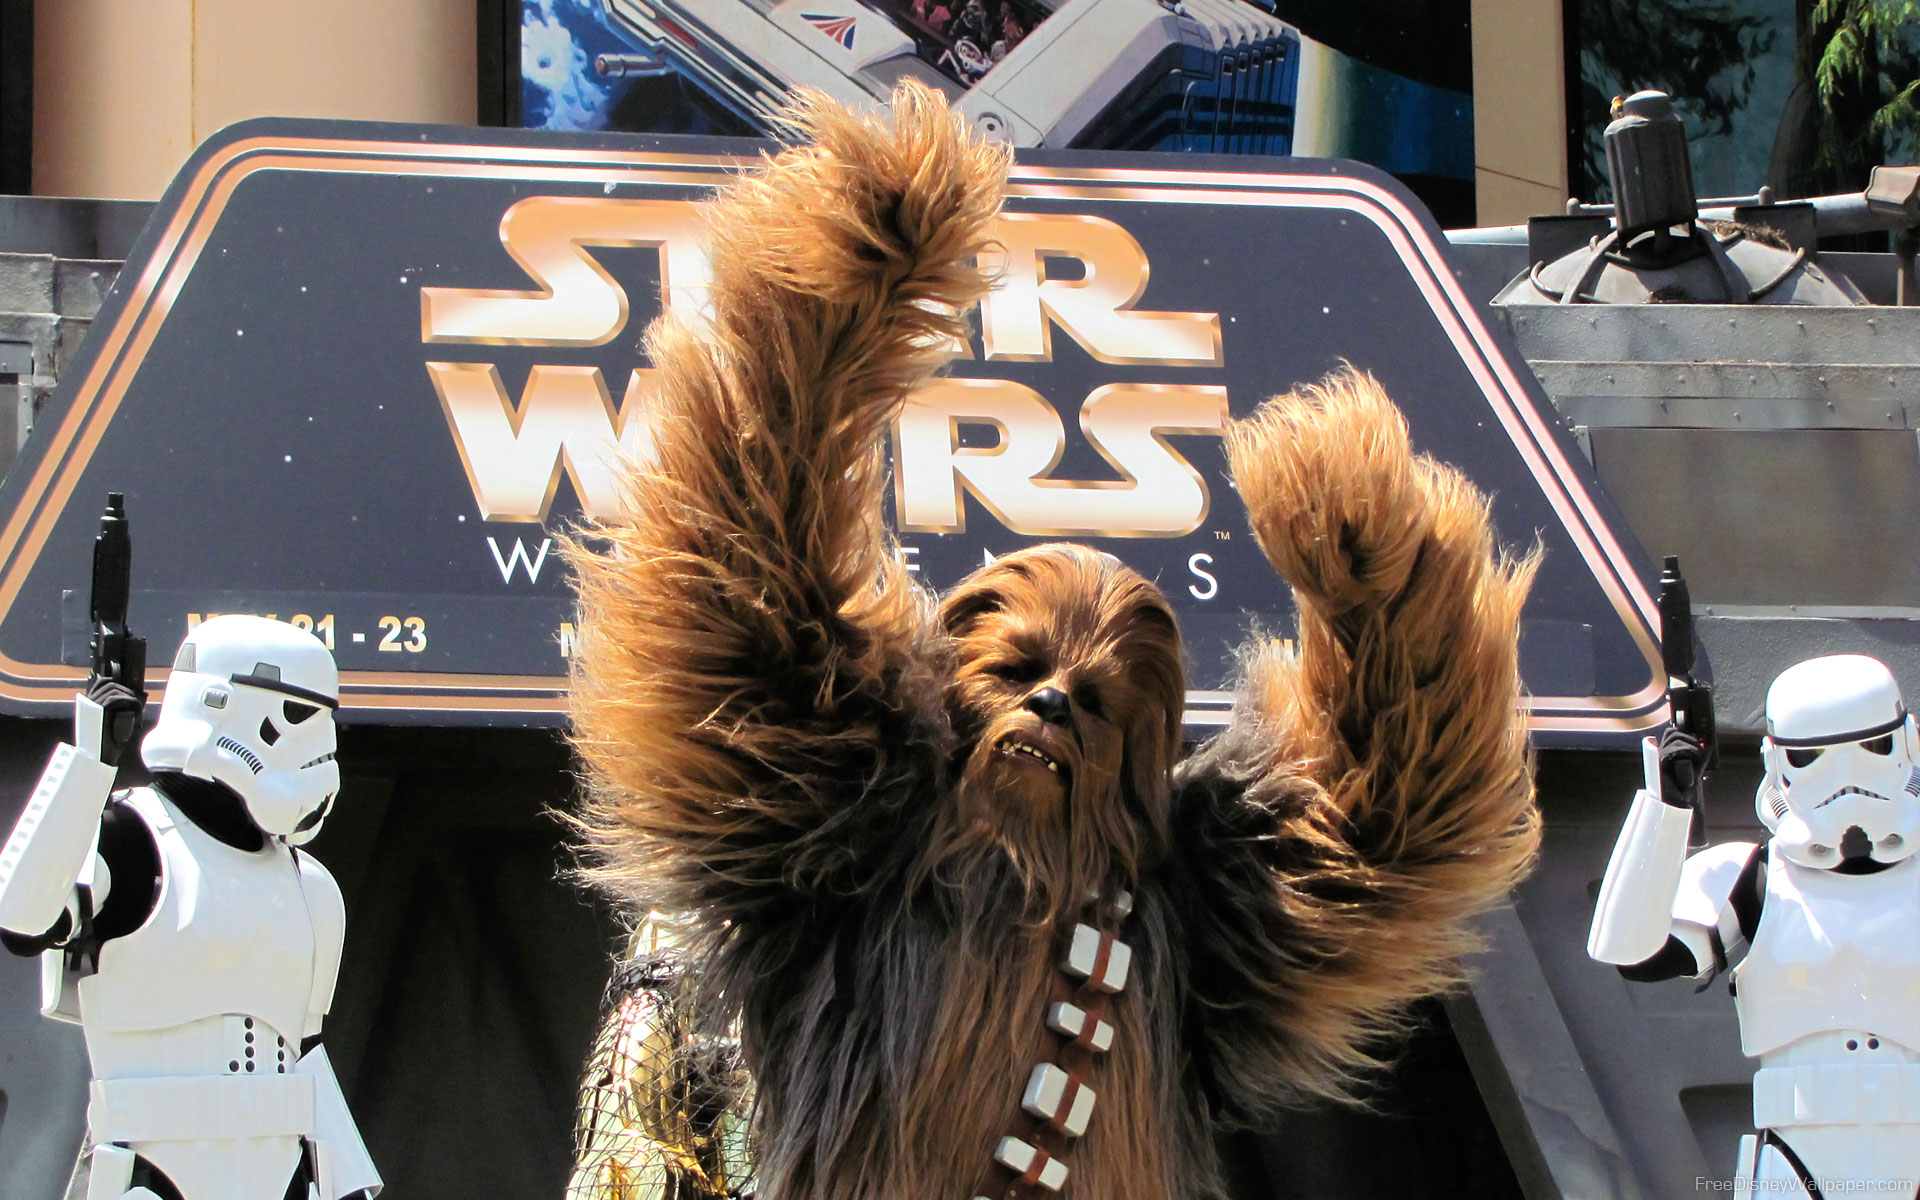 Chewbacca Star Wars Wallpaper